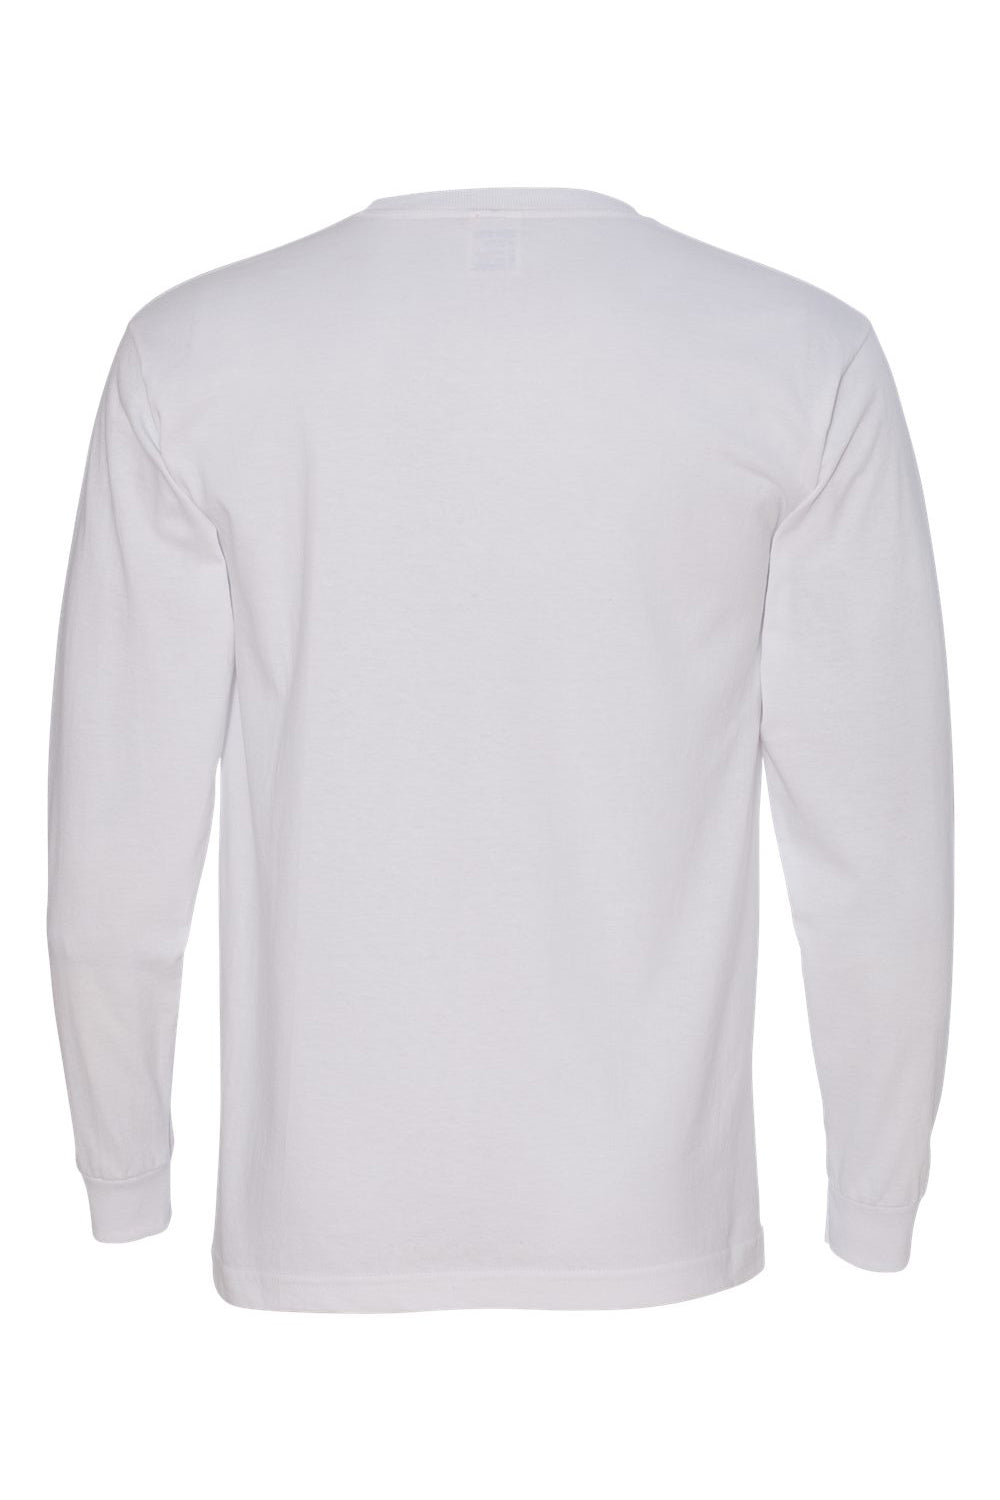 Bayside BA5060 Mens USA Made Long Sleeve Crewneck T-Shirt White Flat Back